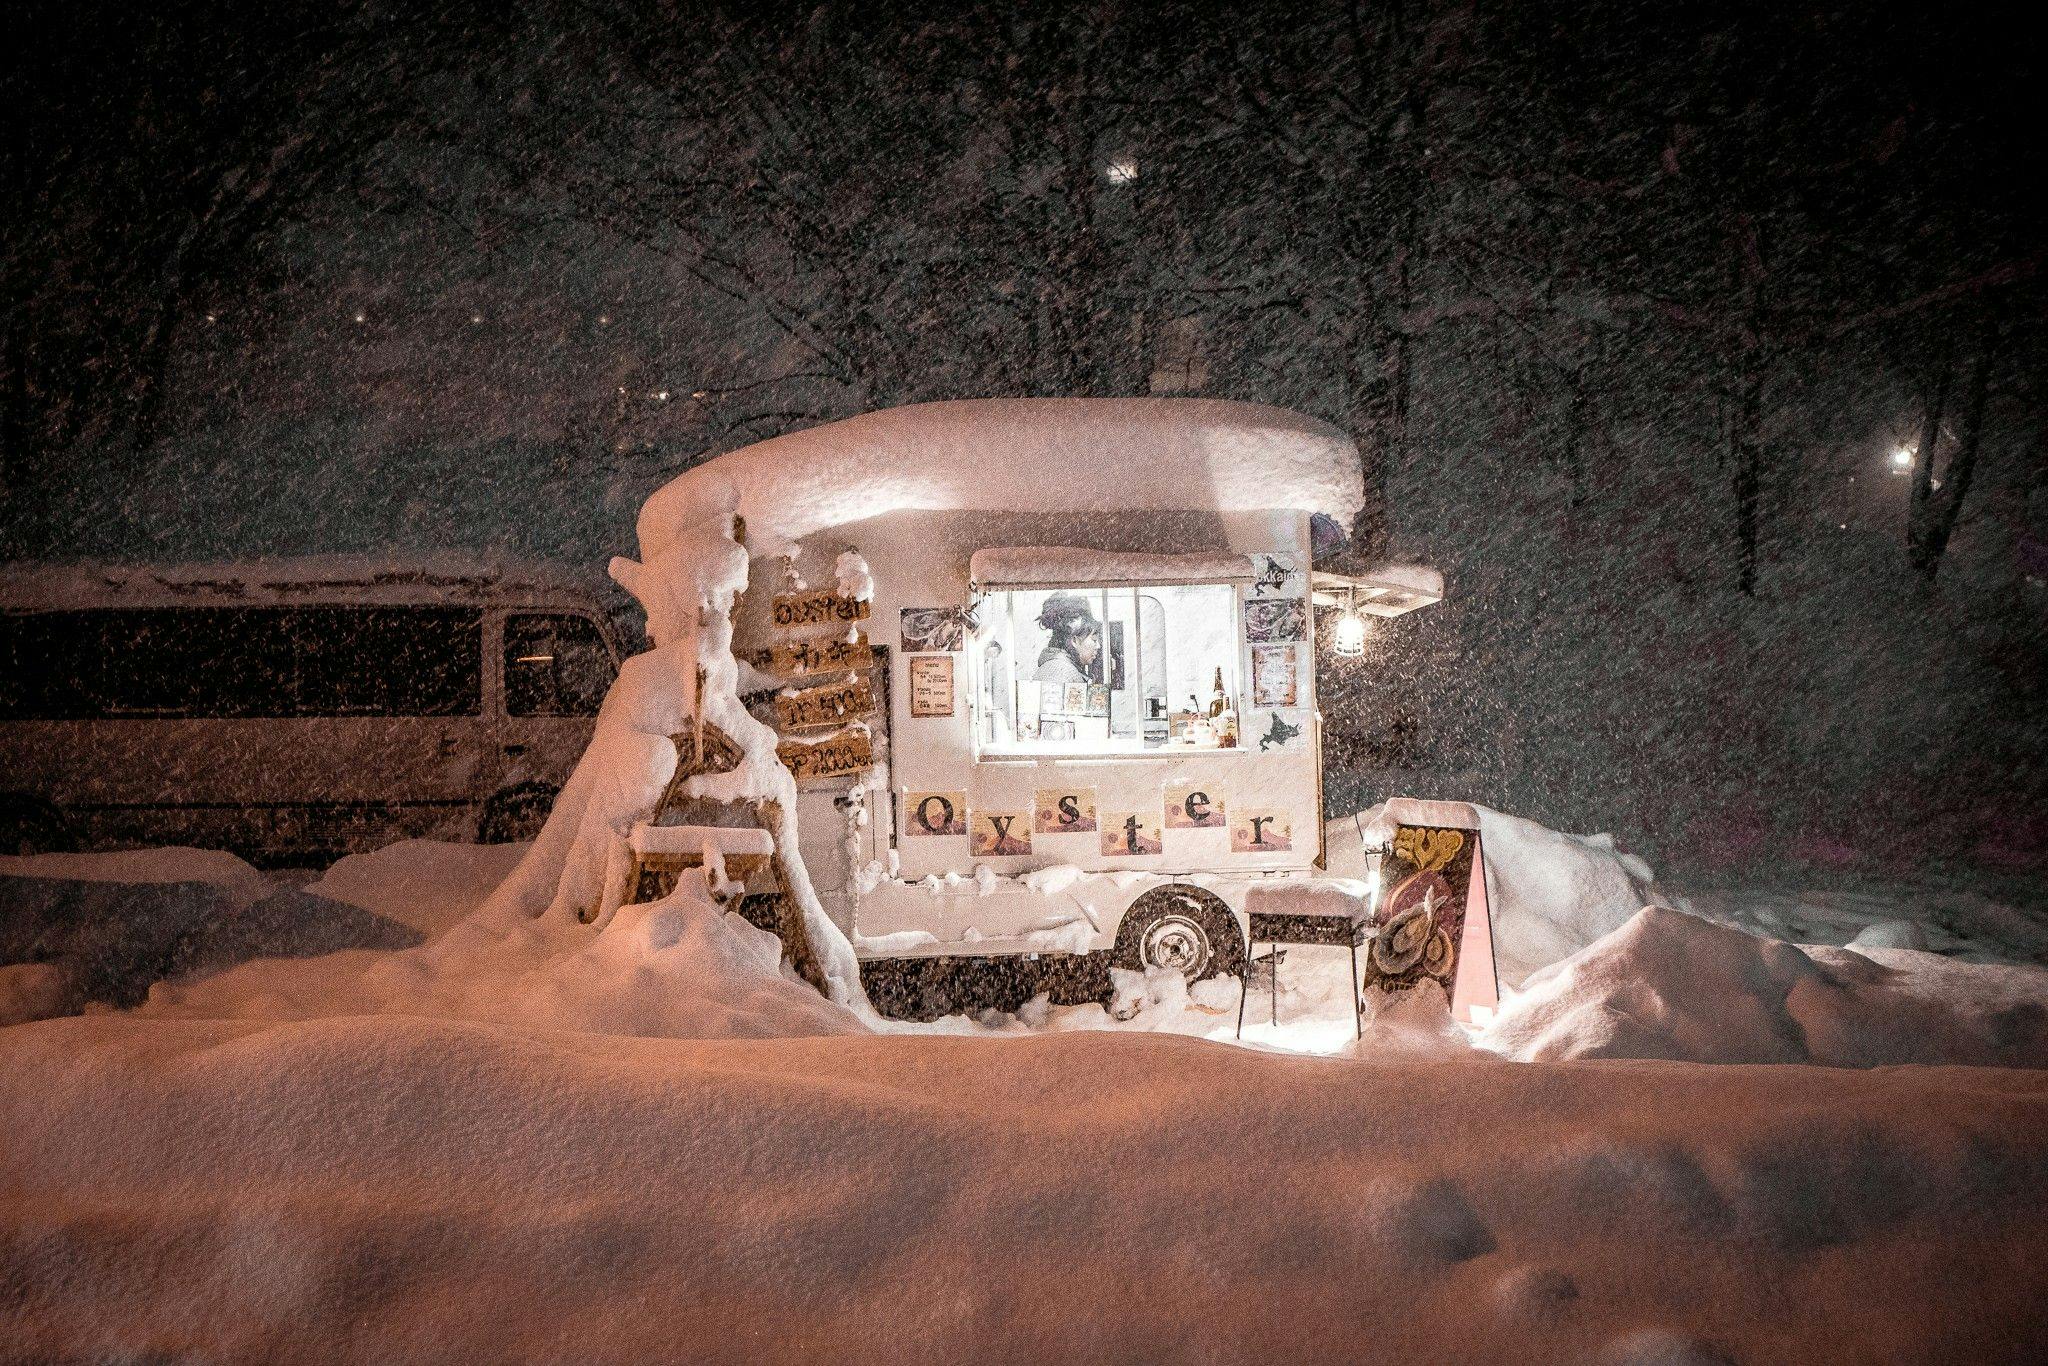 Oyster food truck located in Niseko. 